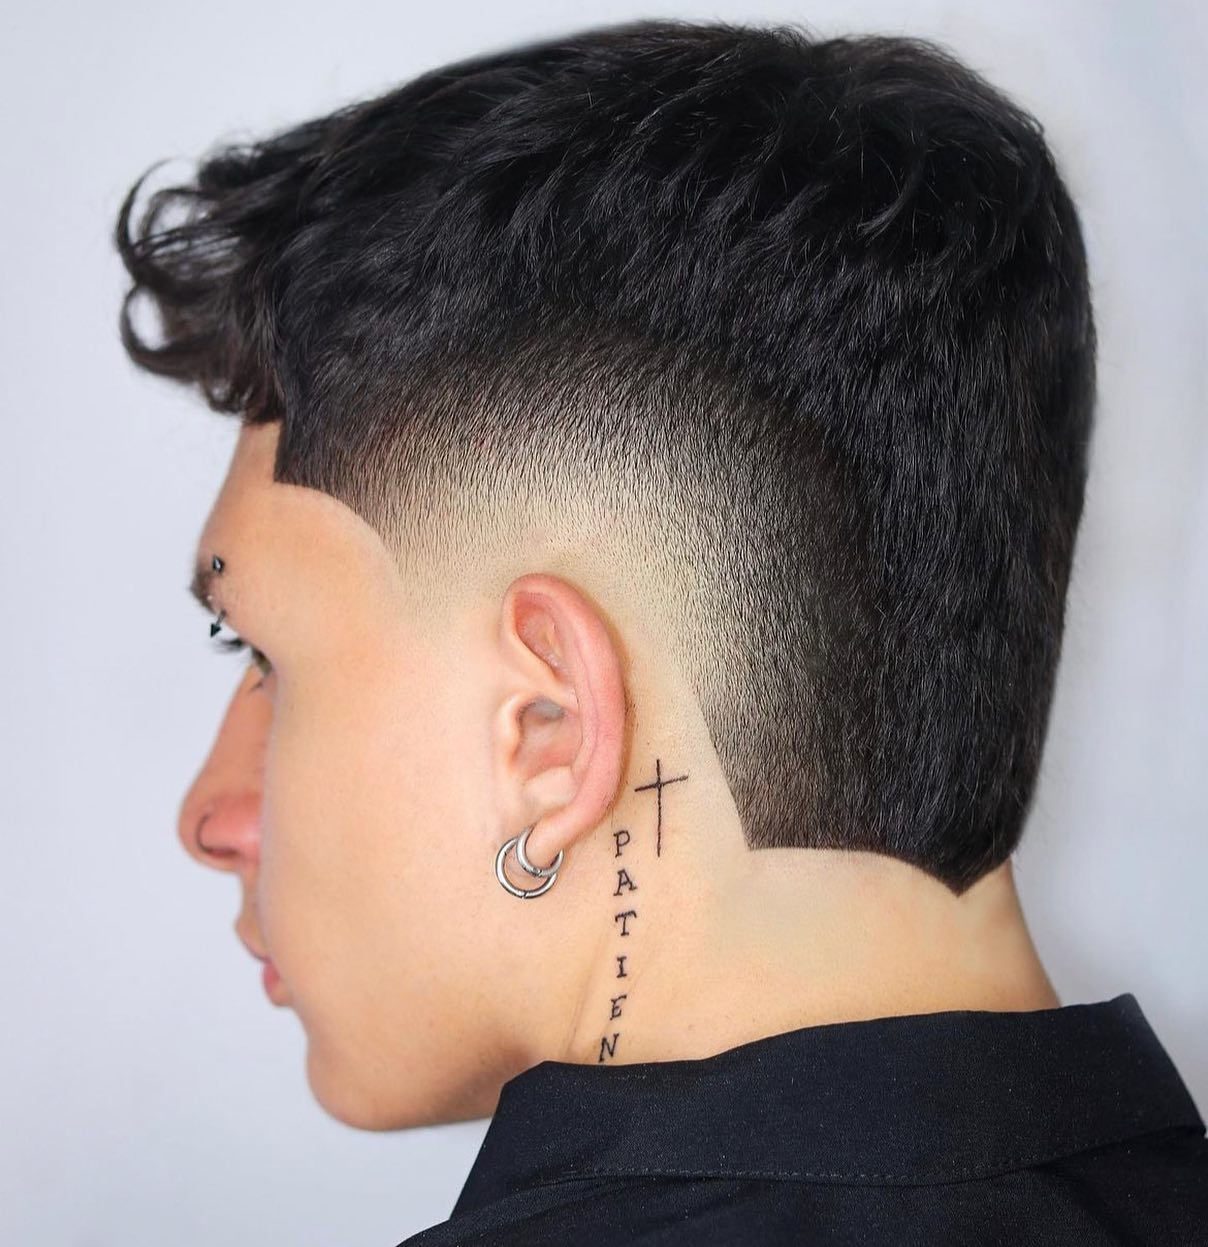 Fade Cut 436 Best fade haircut | Fade haircut Black | Fade haircut for Men Fade Cut Hairstyles for Men